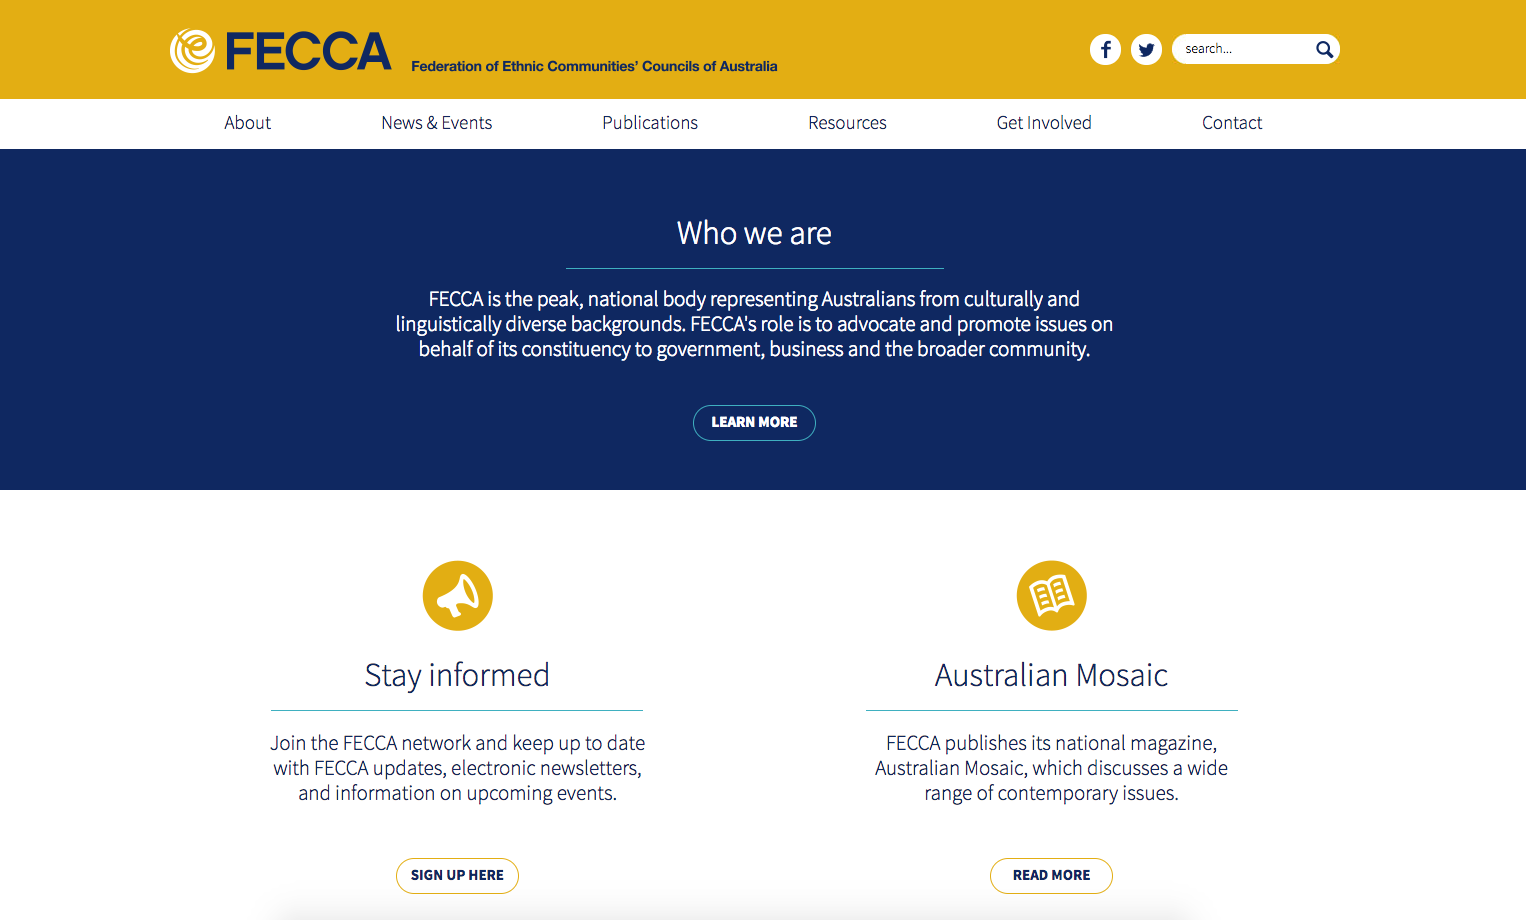 Federation of Ethnic Communities' Councils of Australia - http://fecca.org.au/